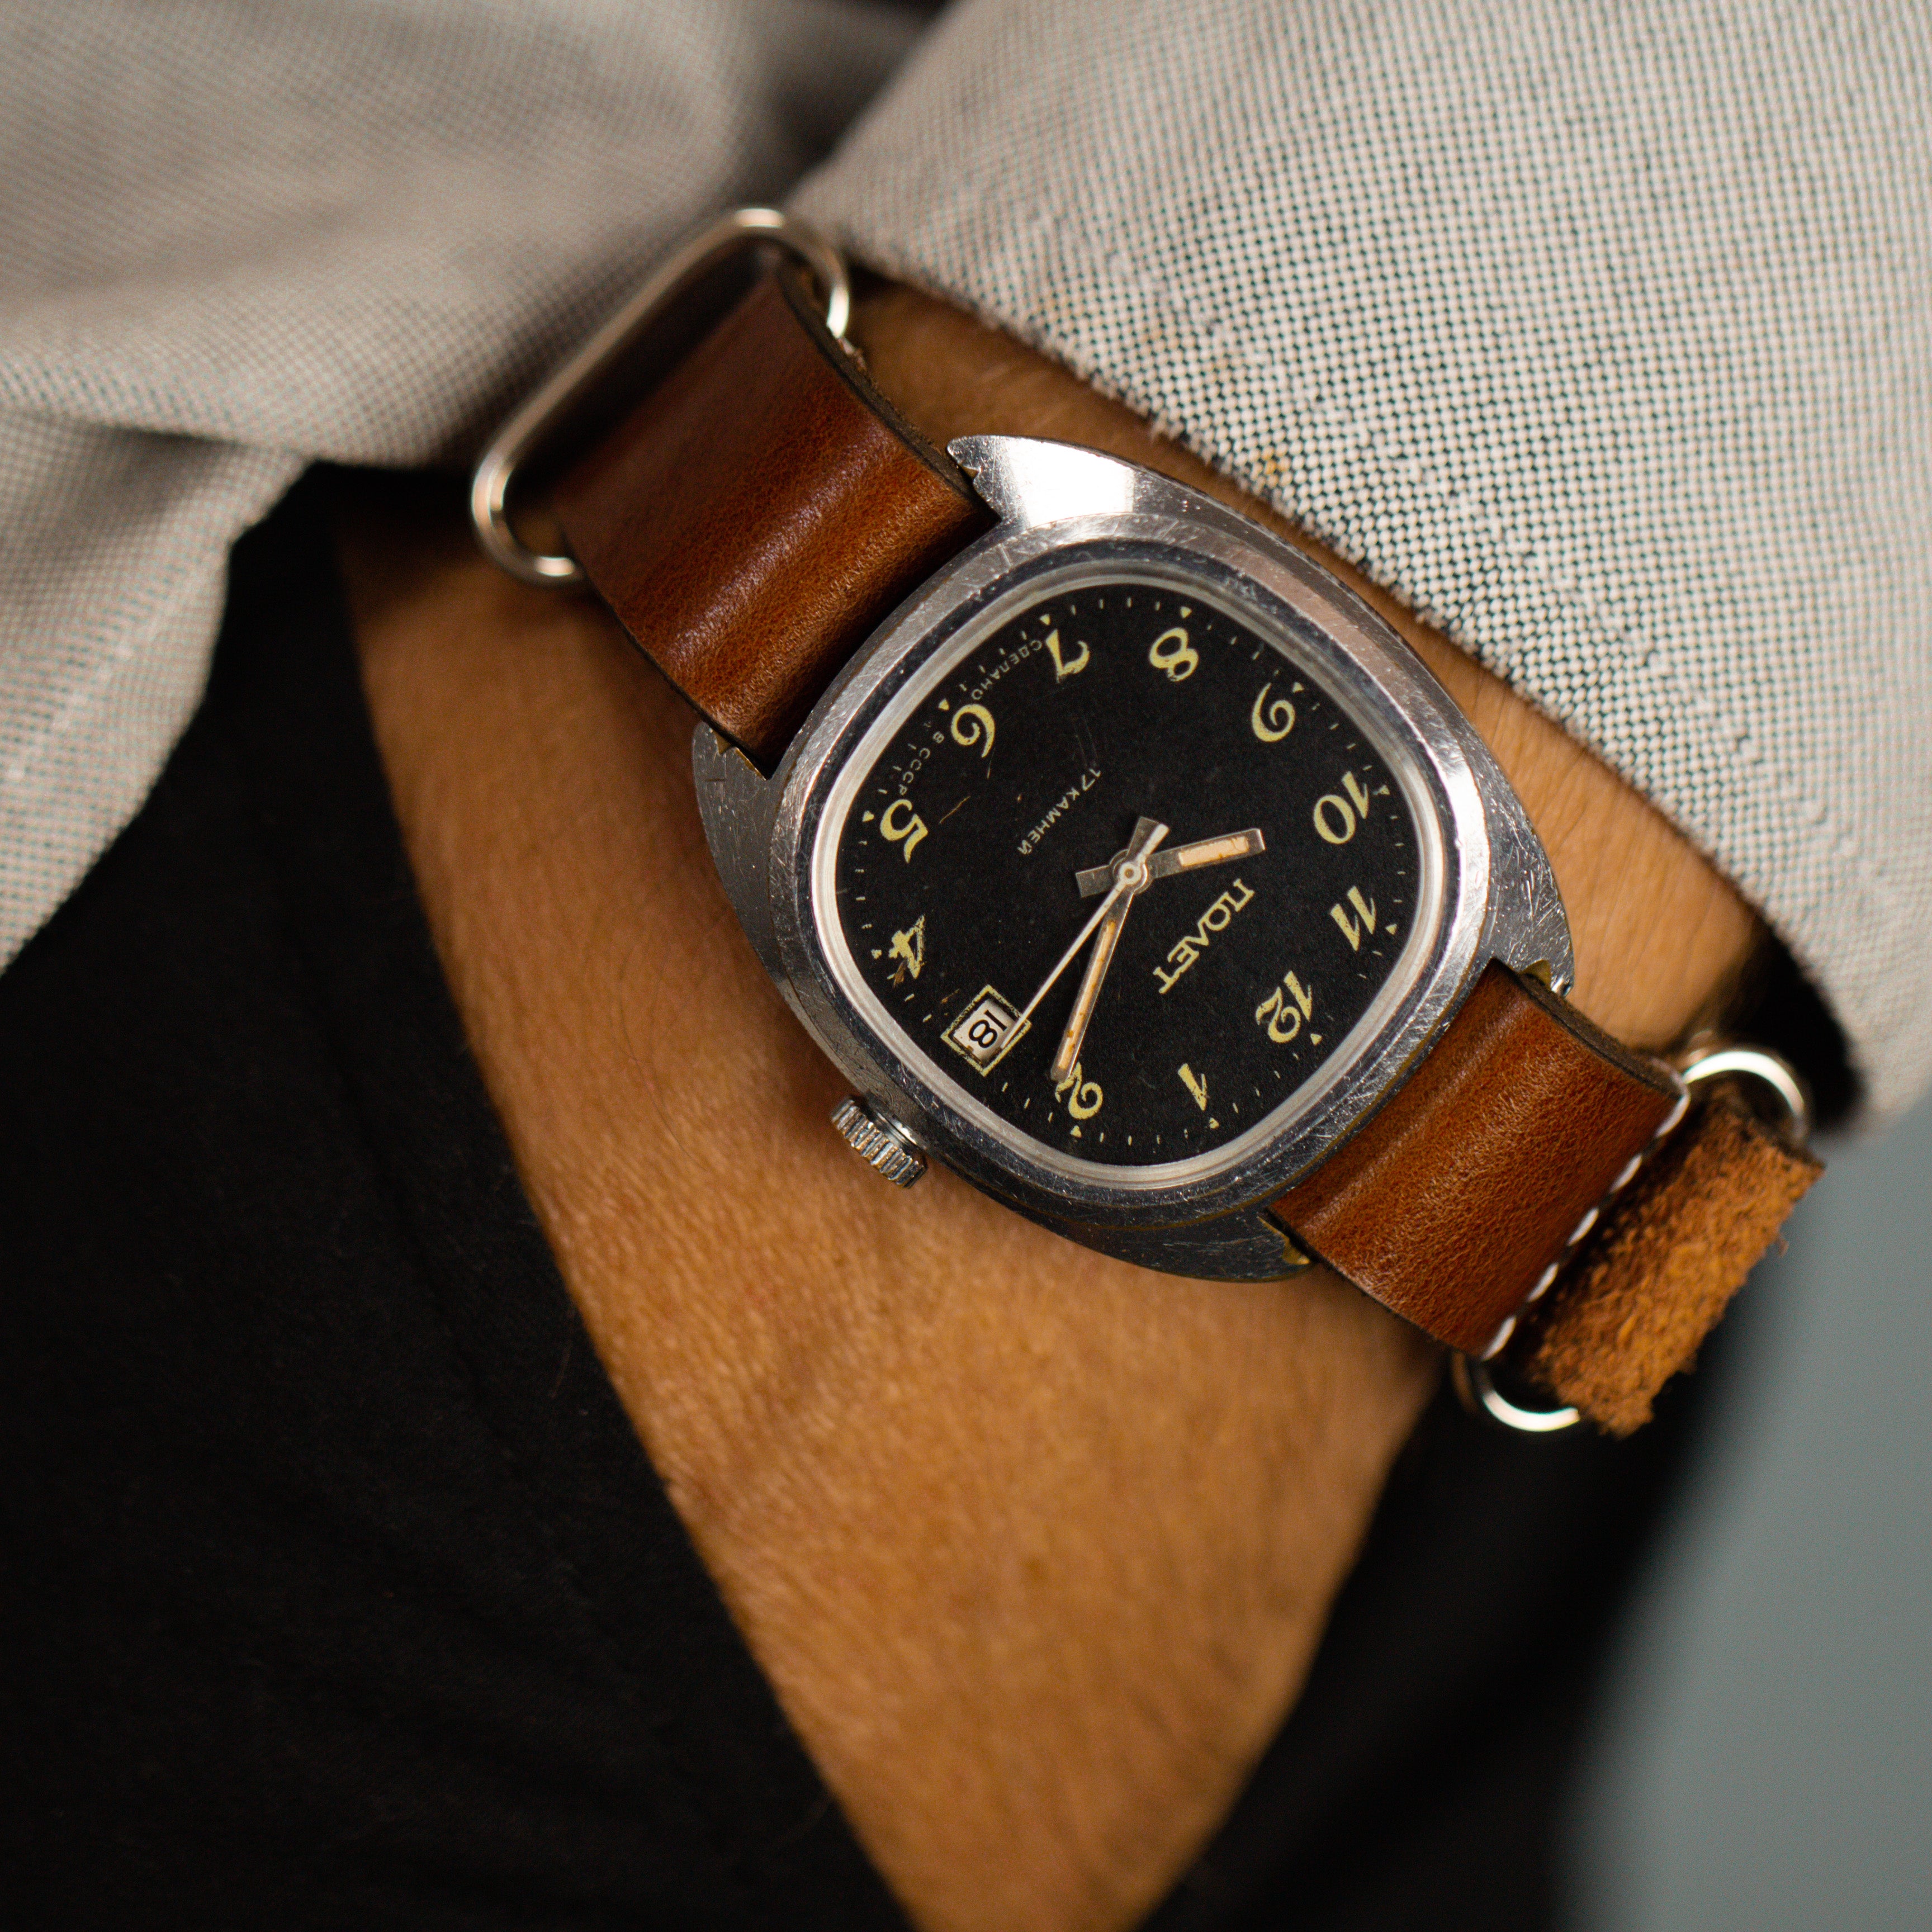 Soviet vintage rare watch for men Poljot de luxe with leather nato strap